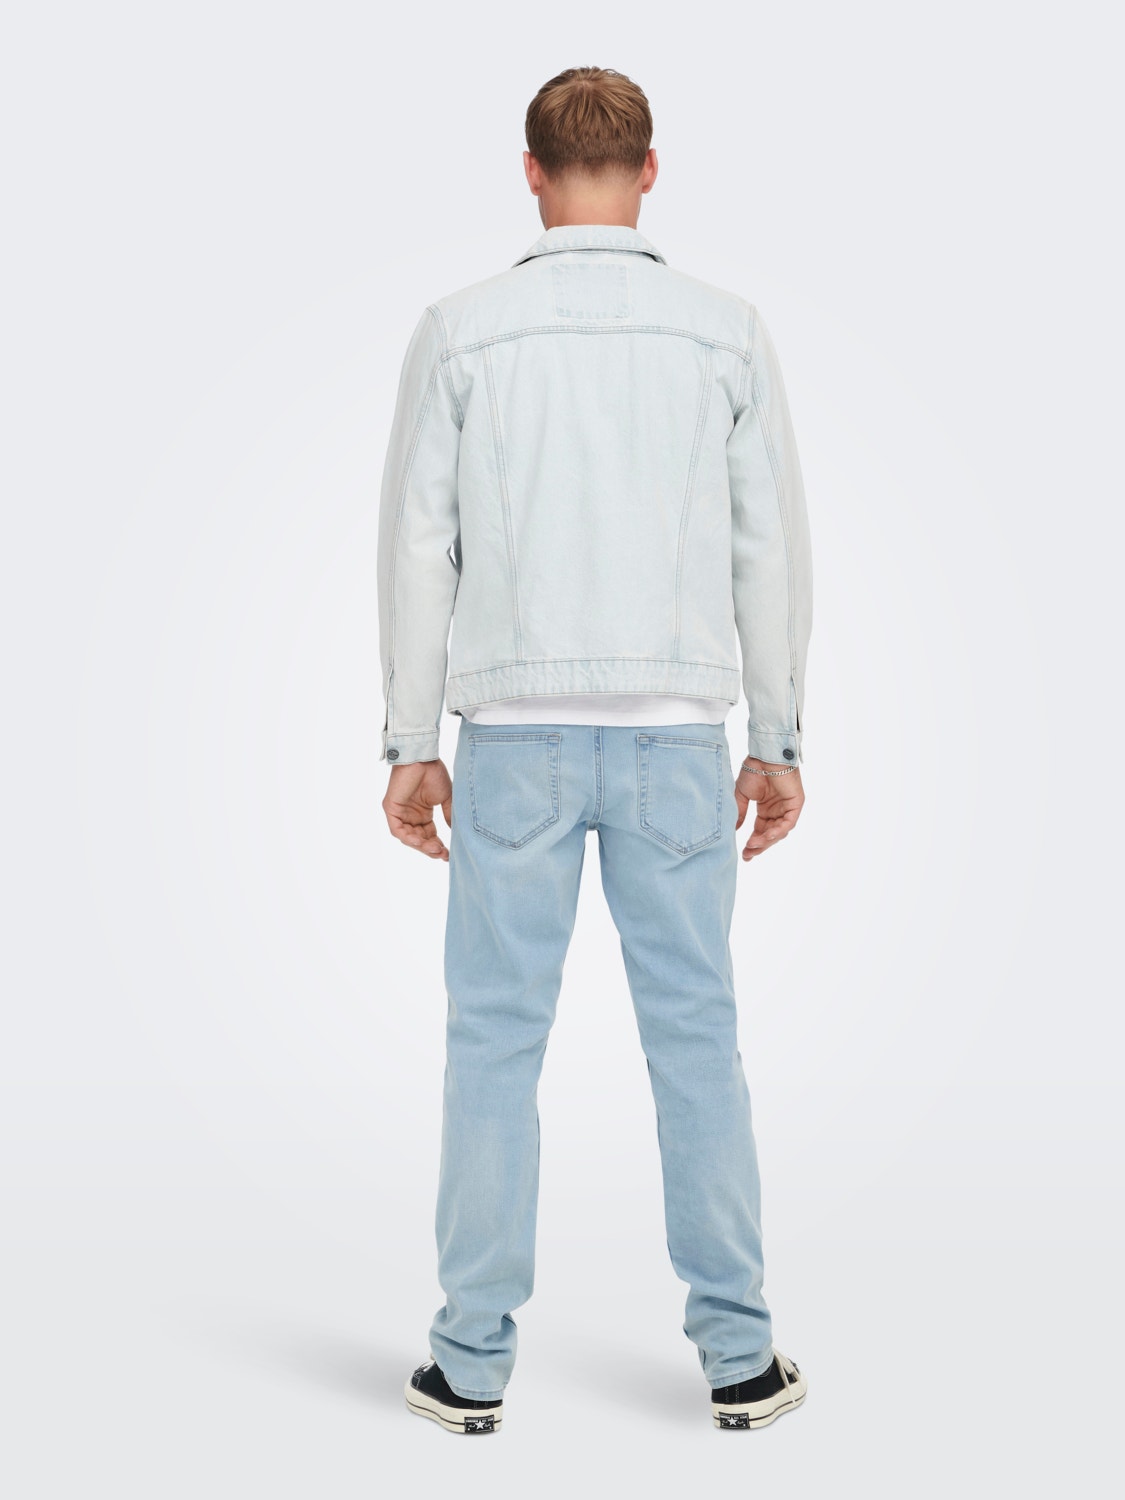 ONLY & SONS Normal geschnitten Mittlere Taille Jeans -Blue Denim - 22021888